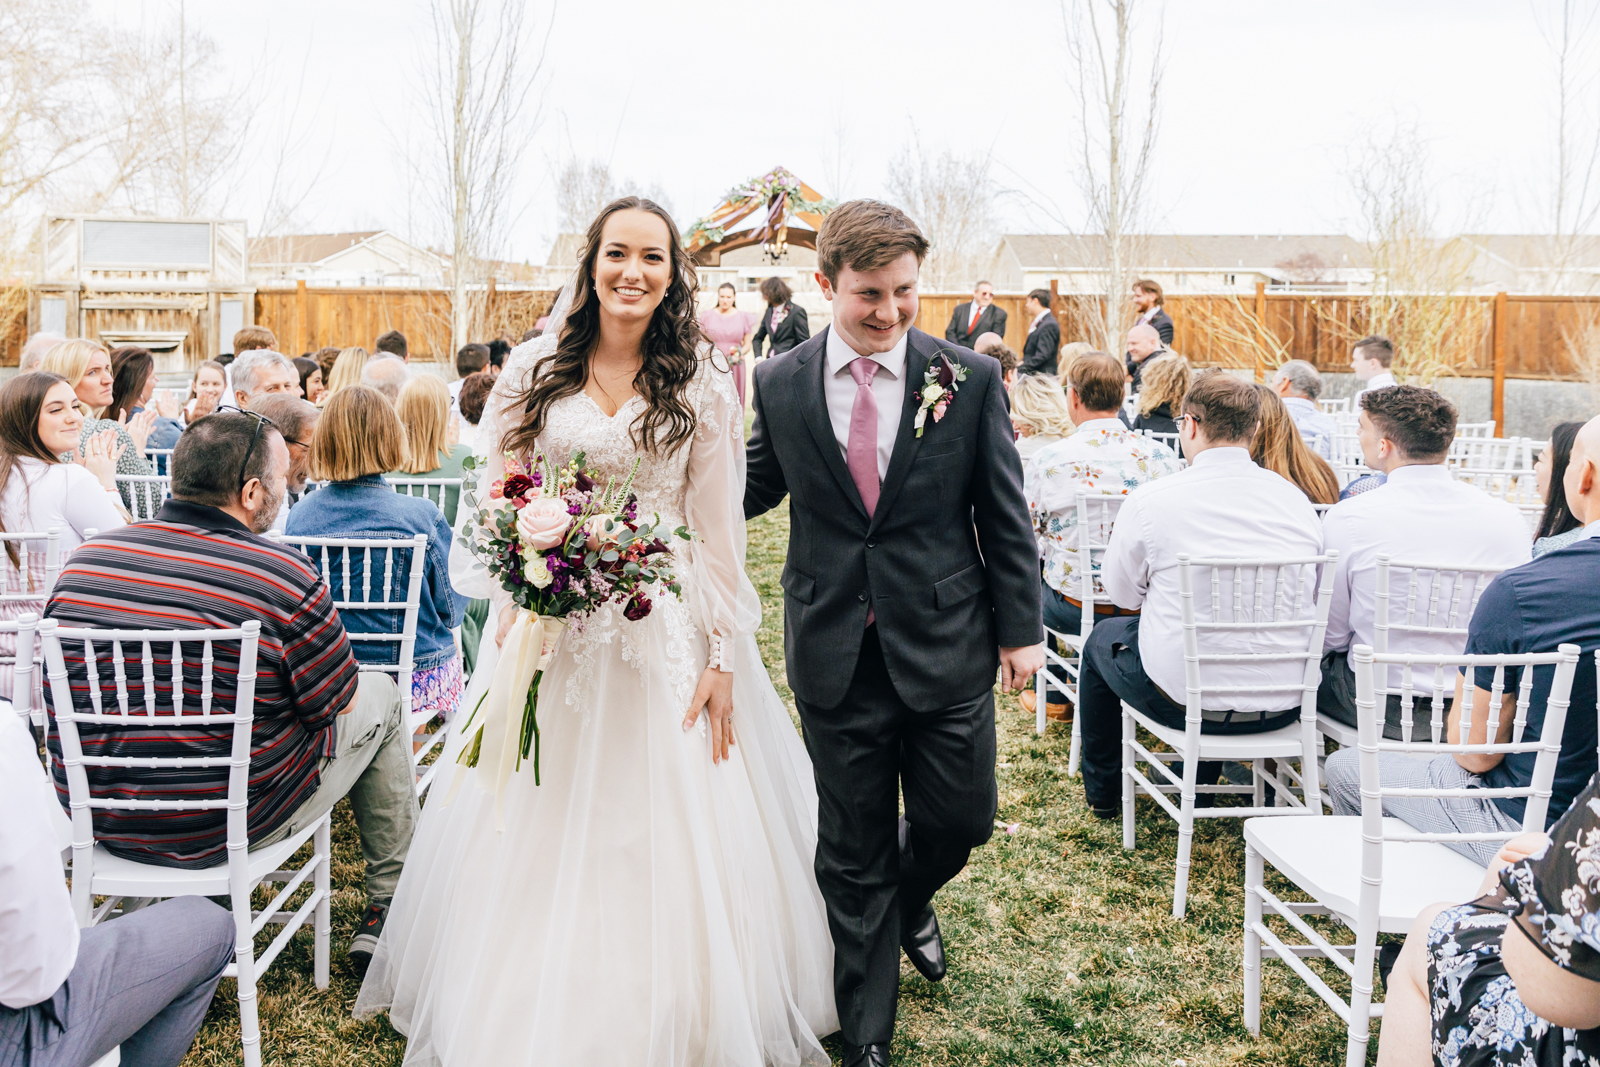 Jackson Hole wedding photographer captures bride and groom walking down aisle together